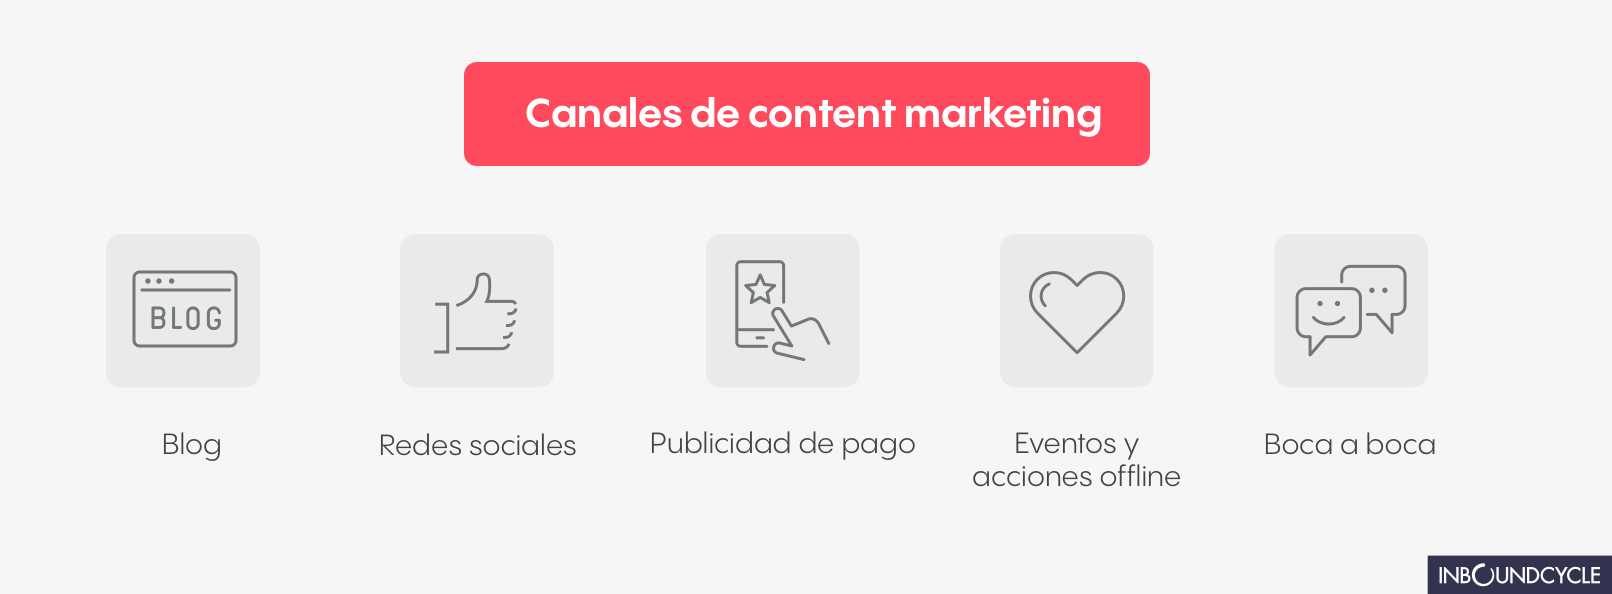 Canales_de_content_marketing